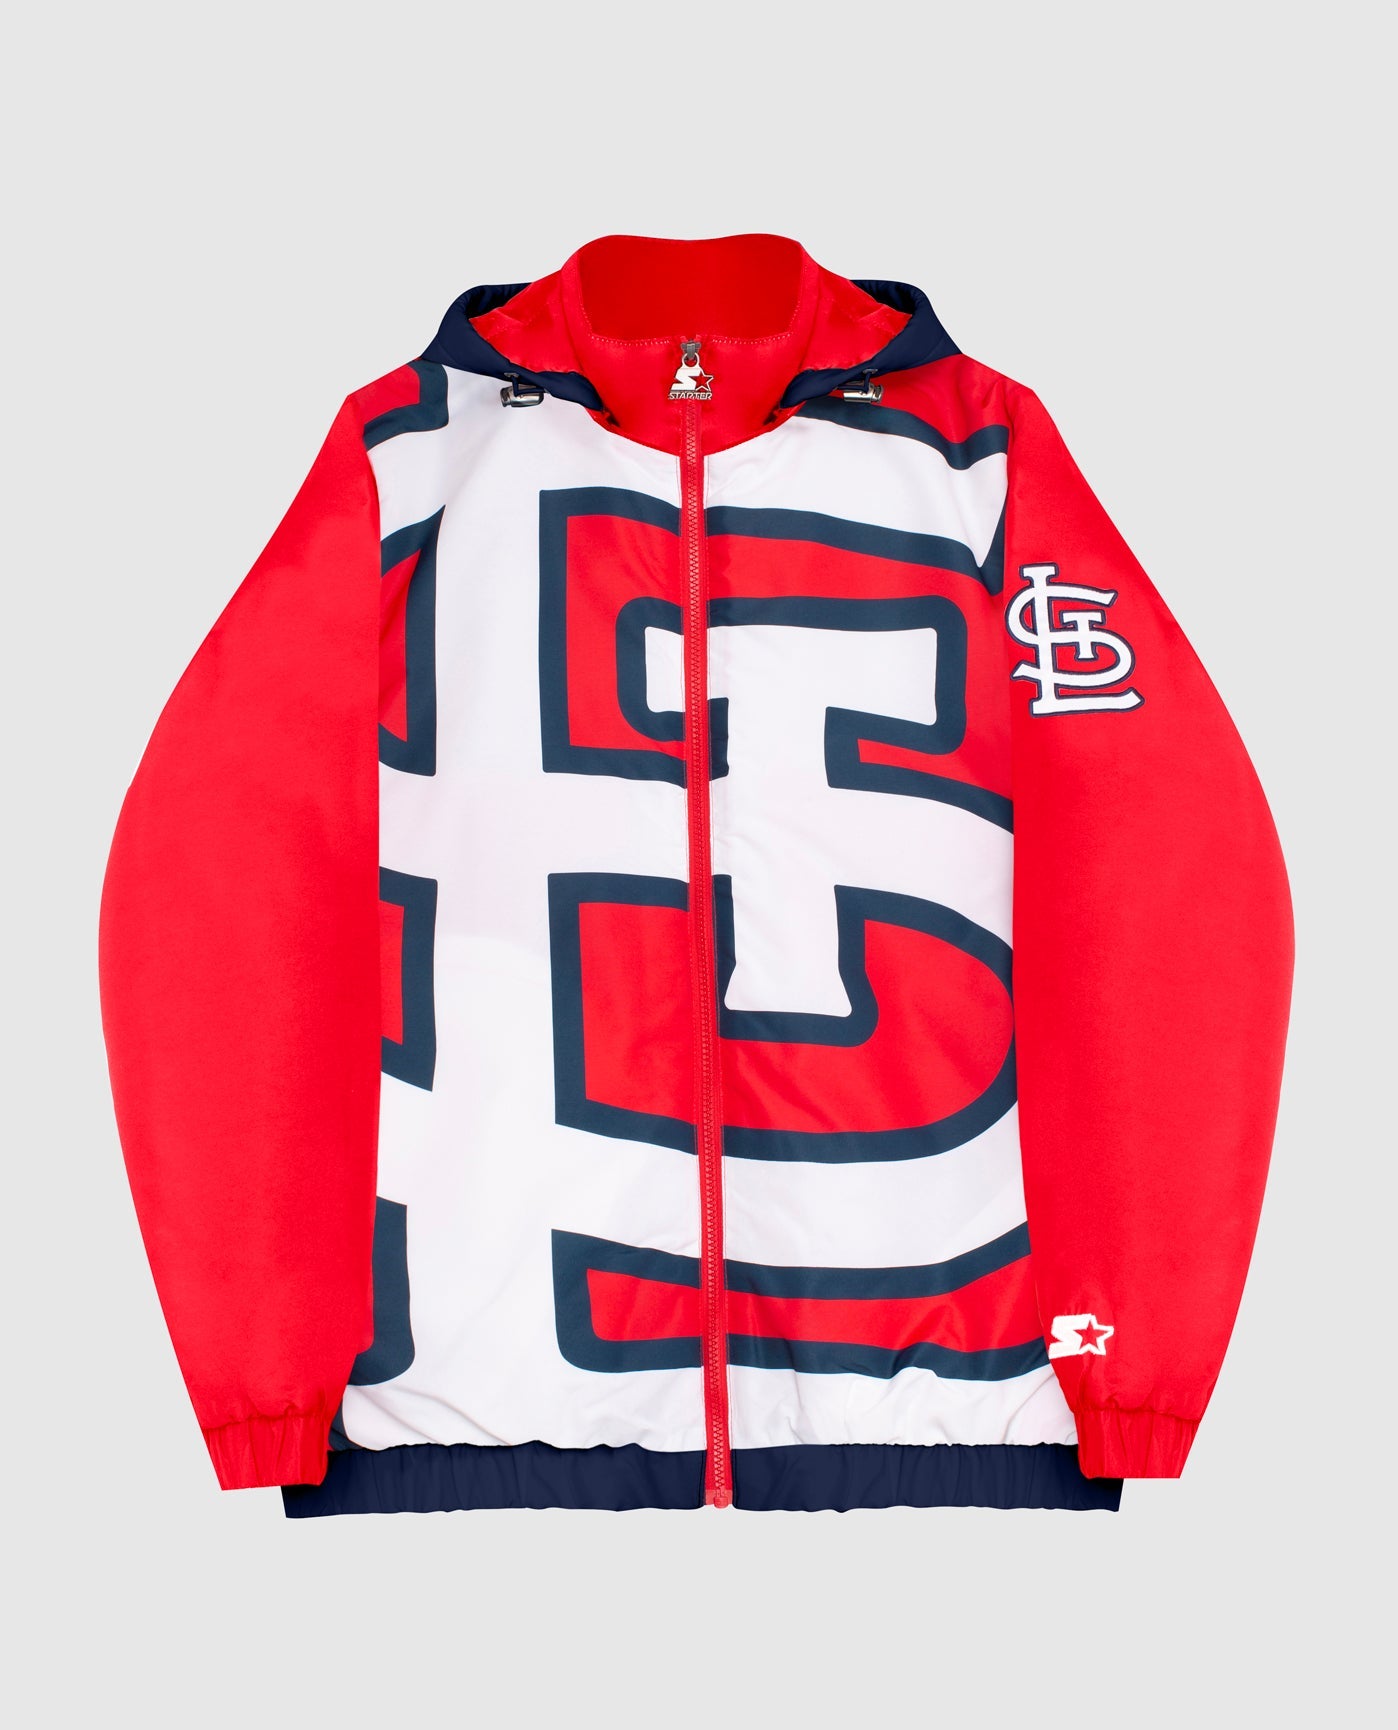 St. Louis Cardinals Ladies Full-Zip Jacket, Ladies Pullover Jacket, Cardinals  Varsity Jackets